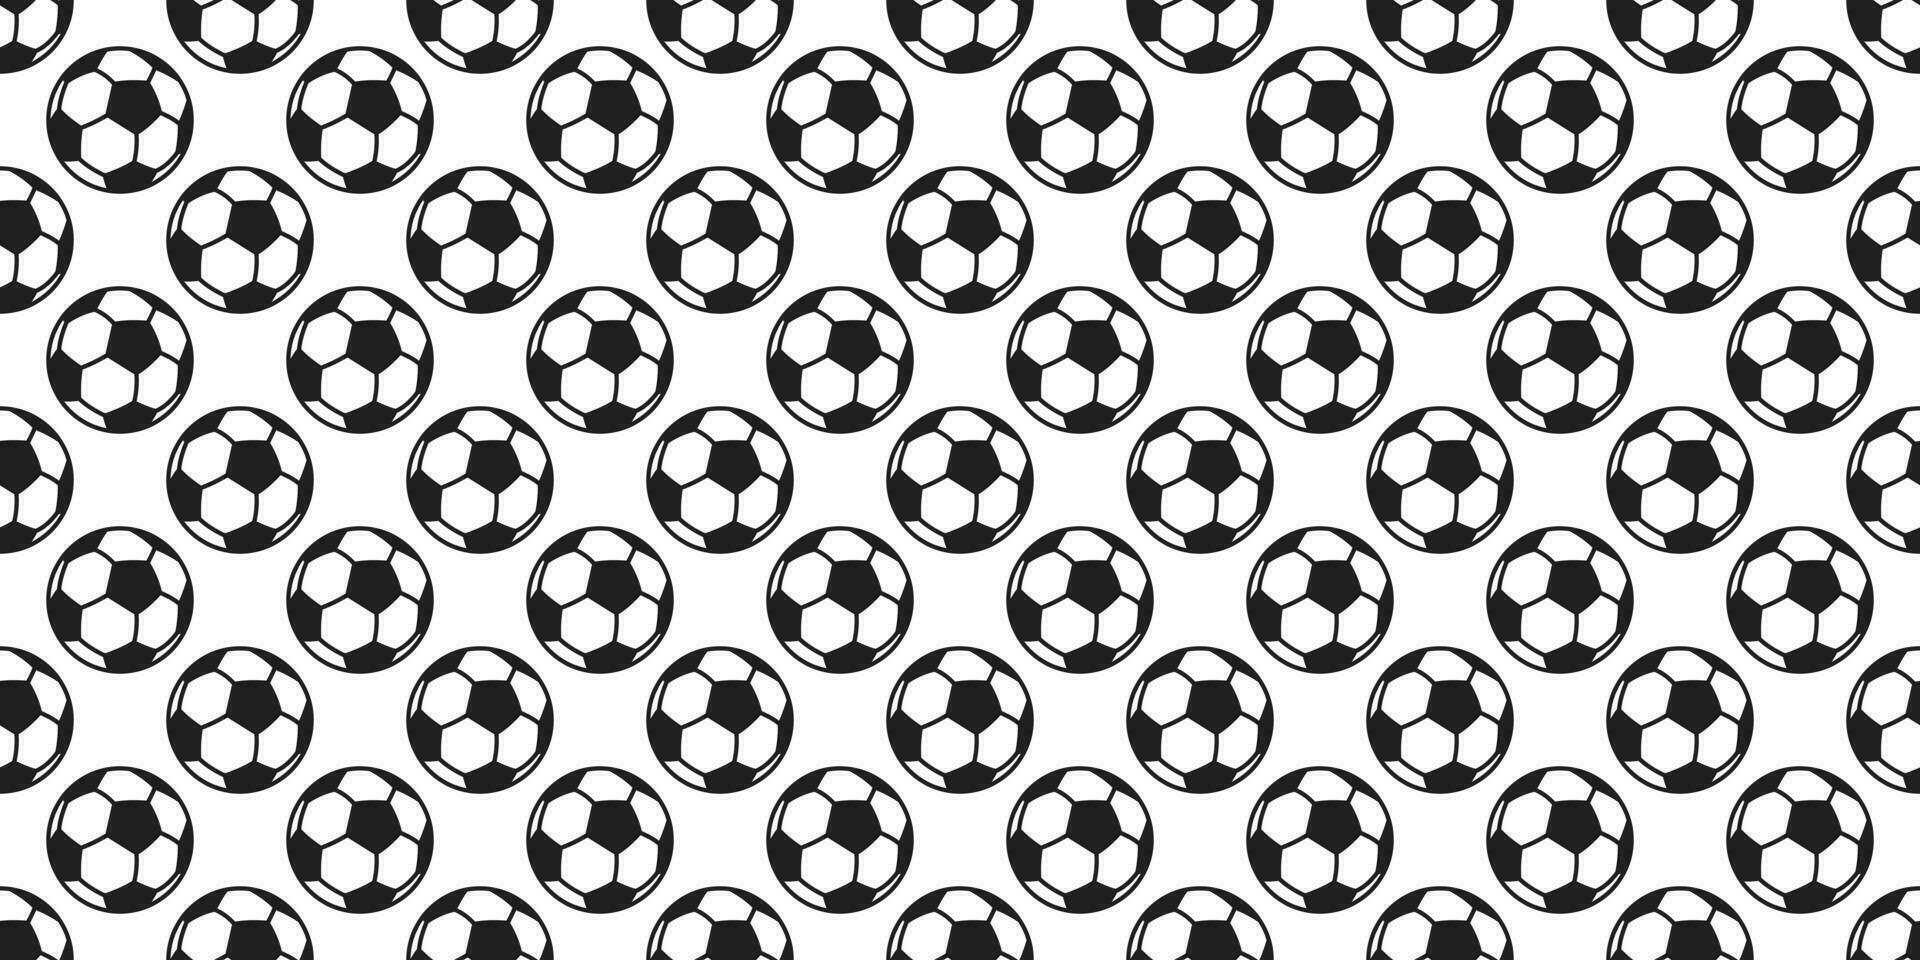 voetbal bal naadloos patroon vector Amerikaans voetbal sport sjaal geïsoleerd tekenfilm achtergrond